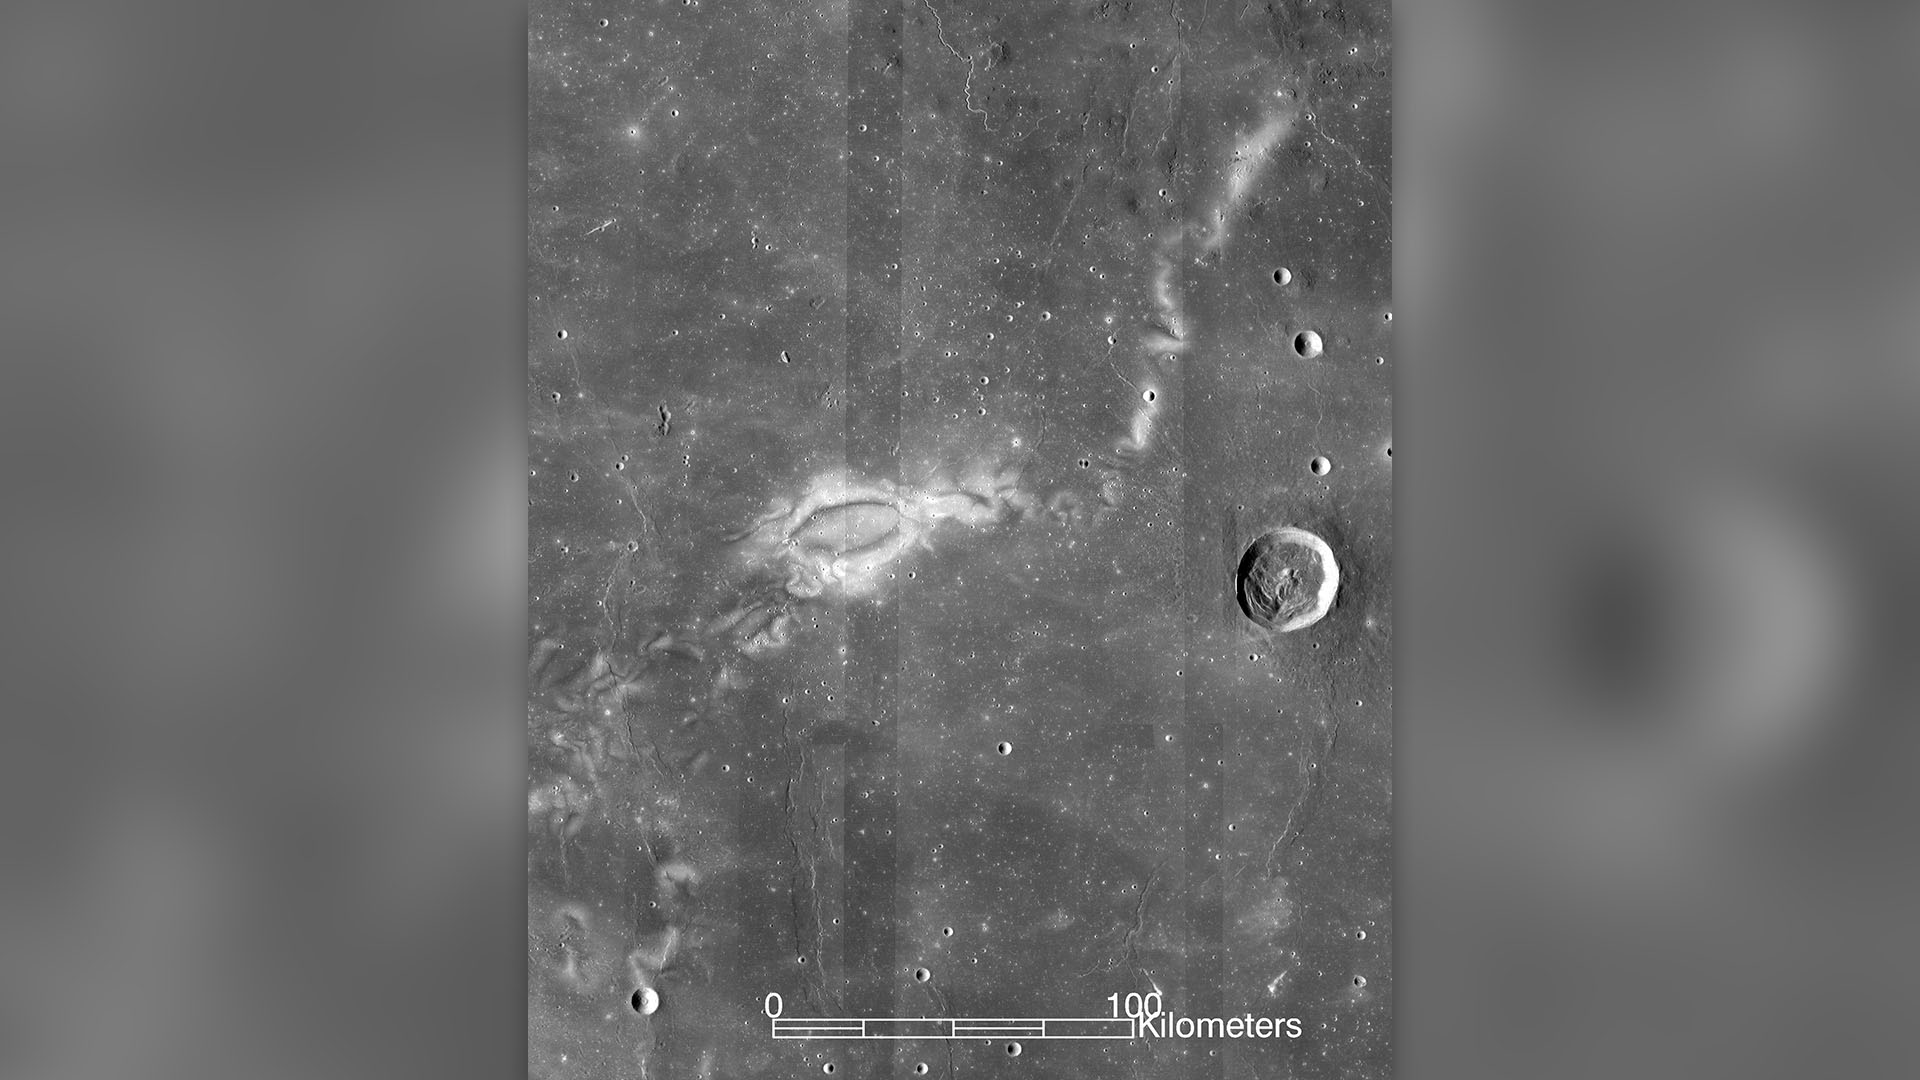 The Reiner Gamma lunar swirl imaged by NASA's Lunar Reconnaissance Orbiter (Image credit: NASA LRO WAC science team)